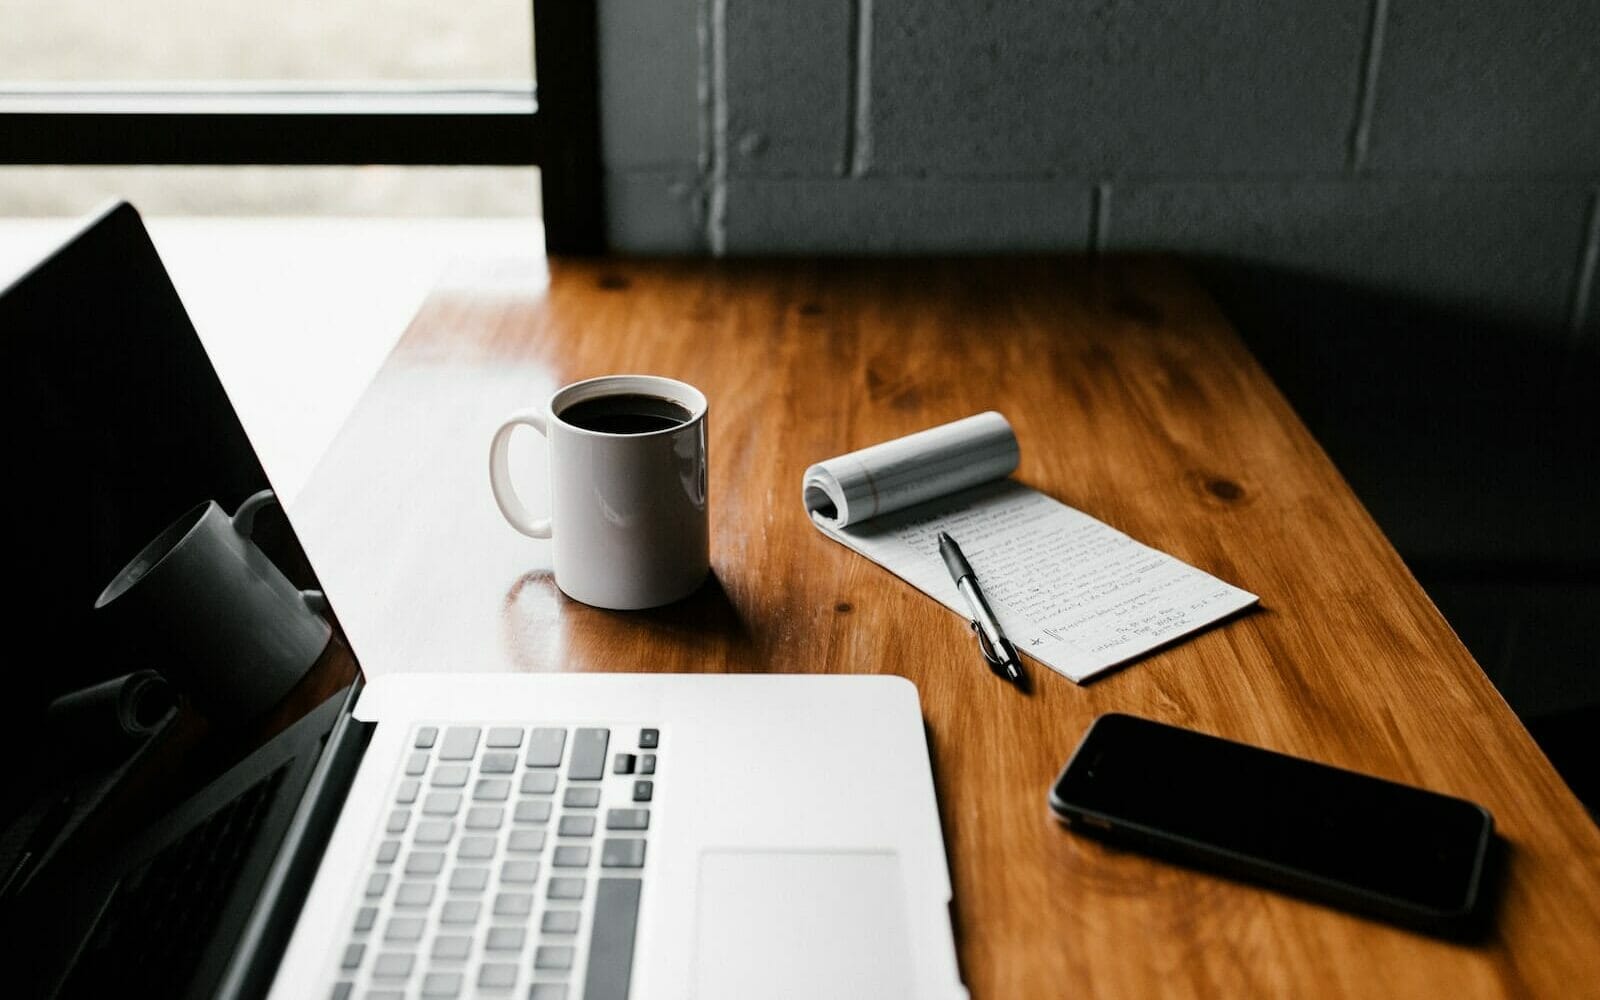 MacBook Pro, white ceramic mug,and black smartphone on table